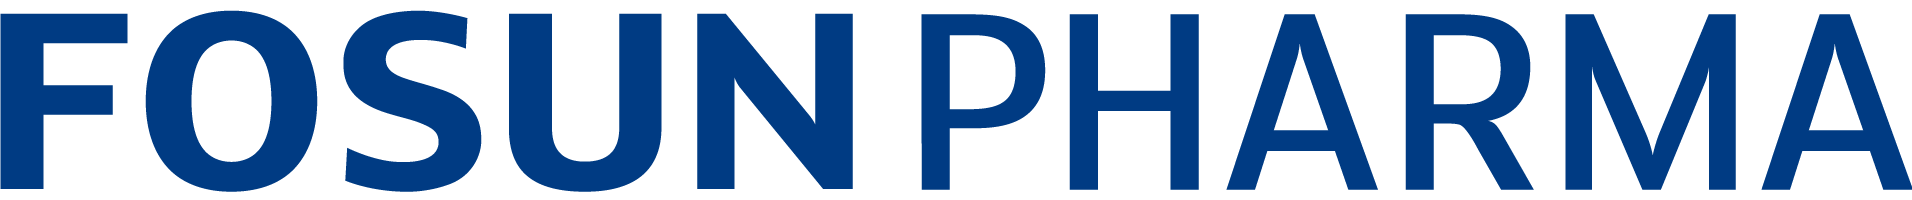 Fosun Pharma logo